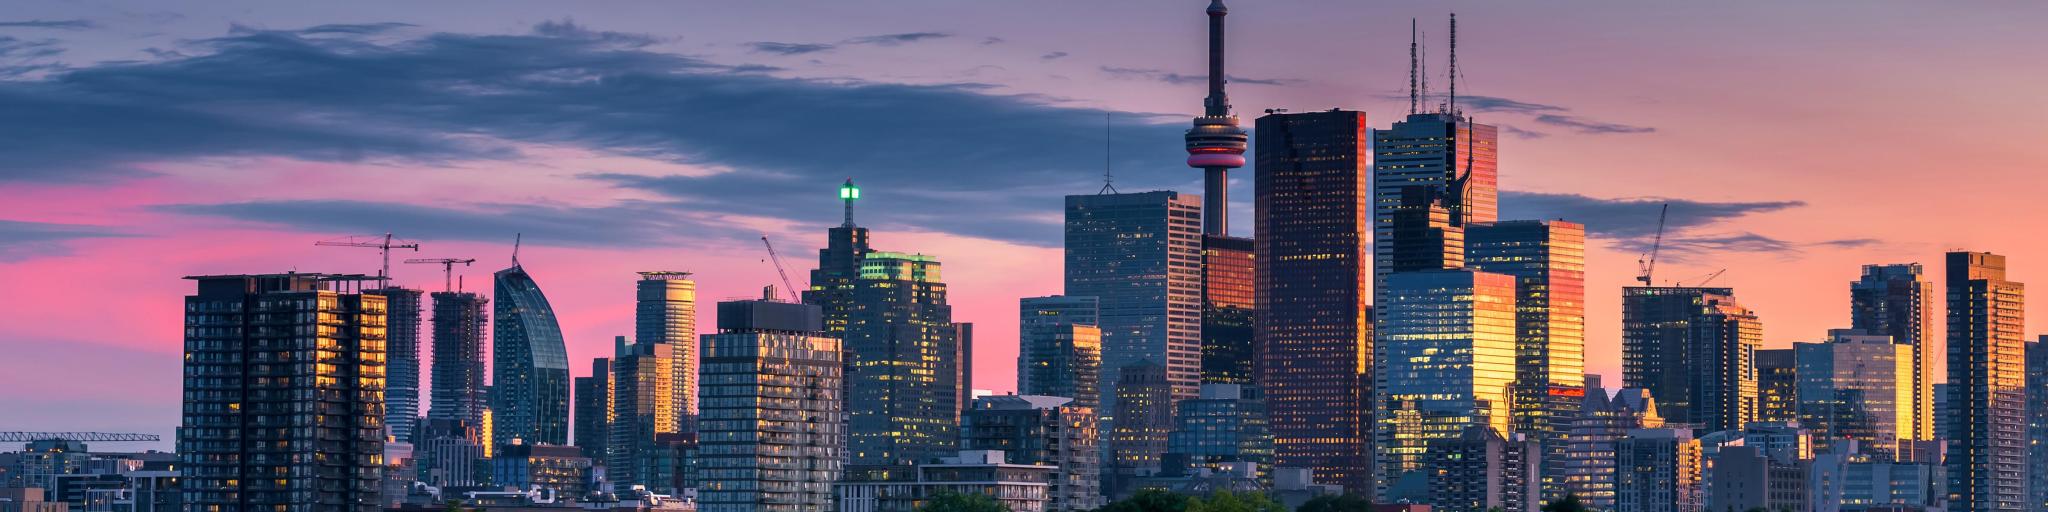 Toronto city at sunset, Ontario, Canada